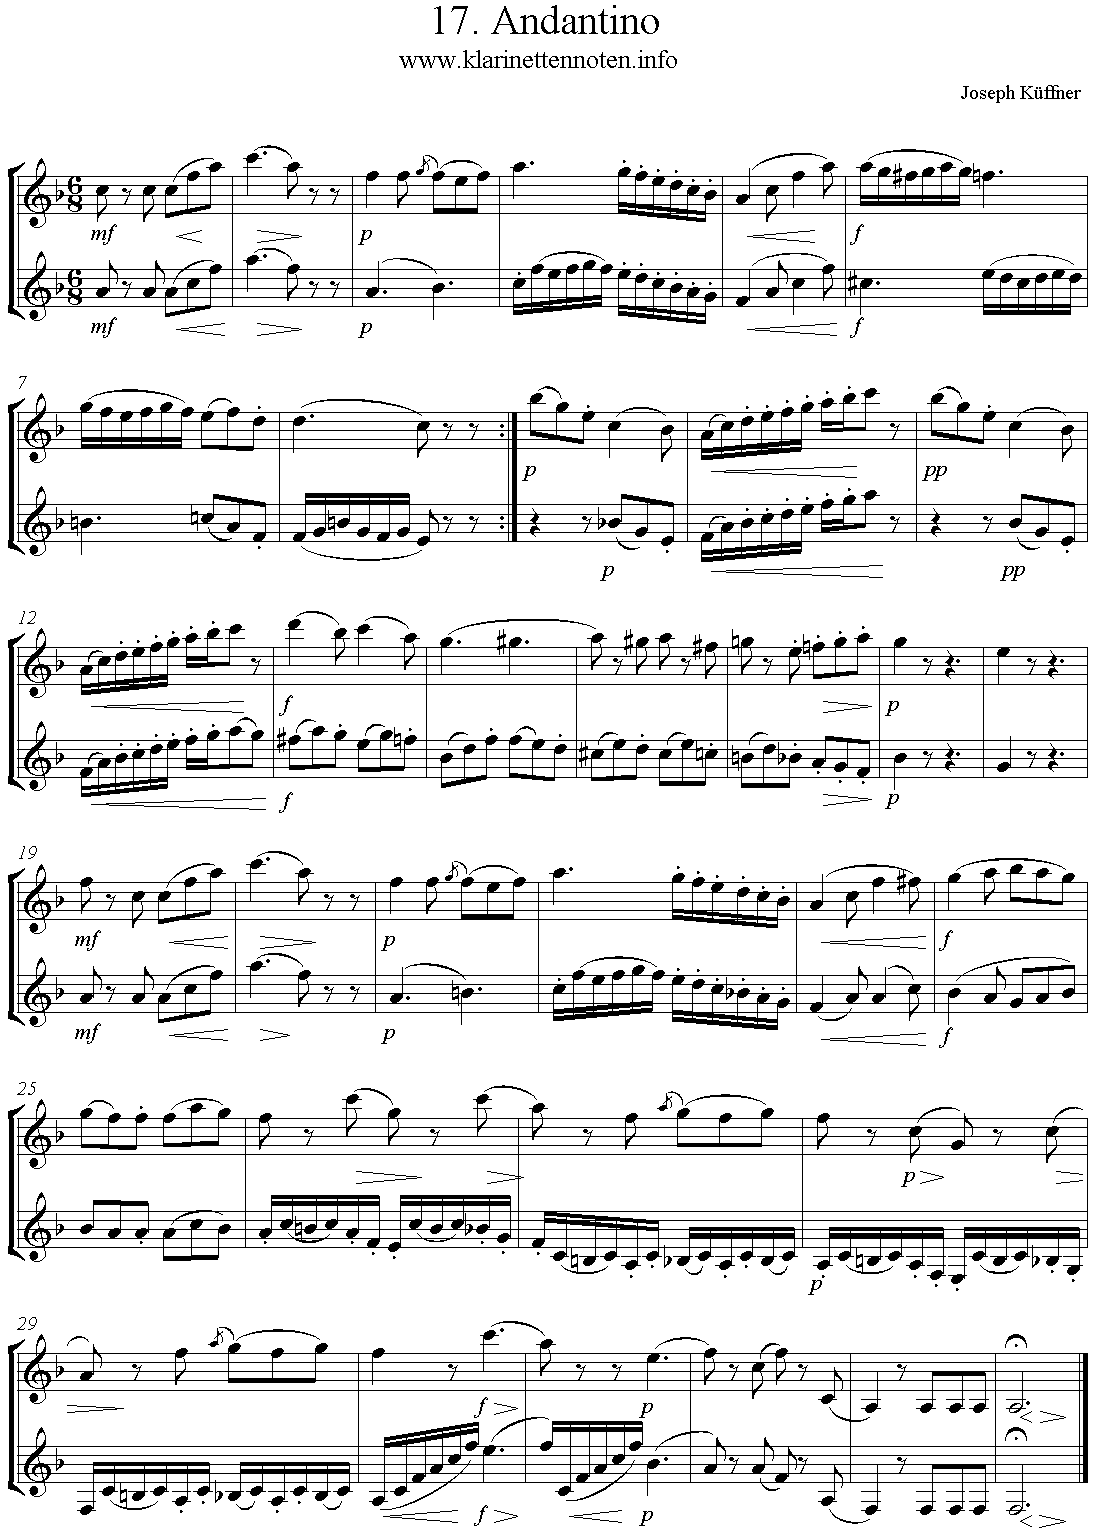 24 instruktive Duette- Joseph Küffner -17 Andantino